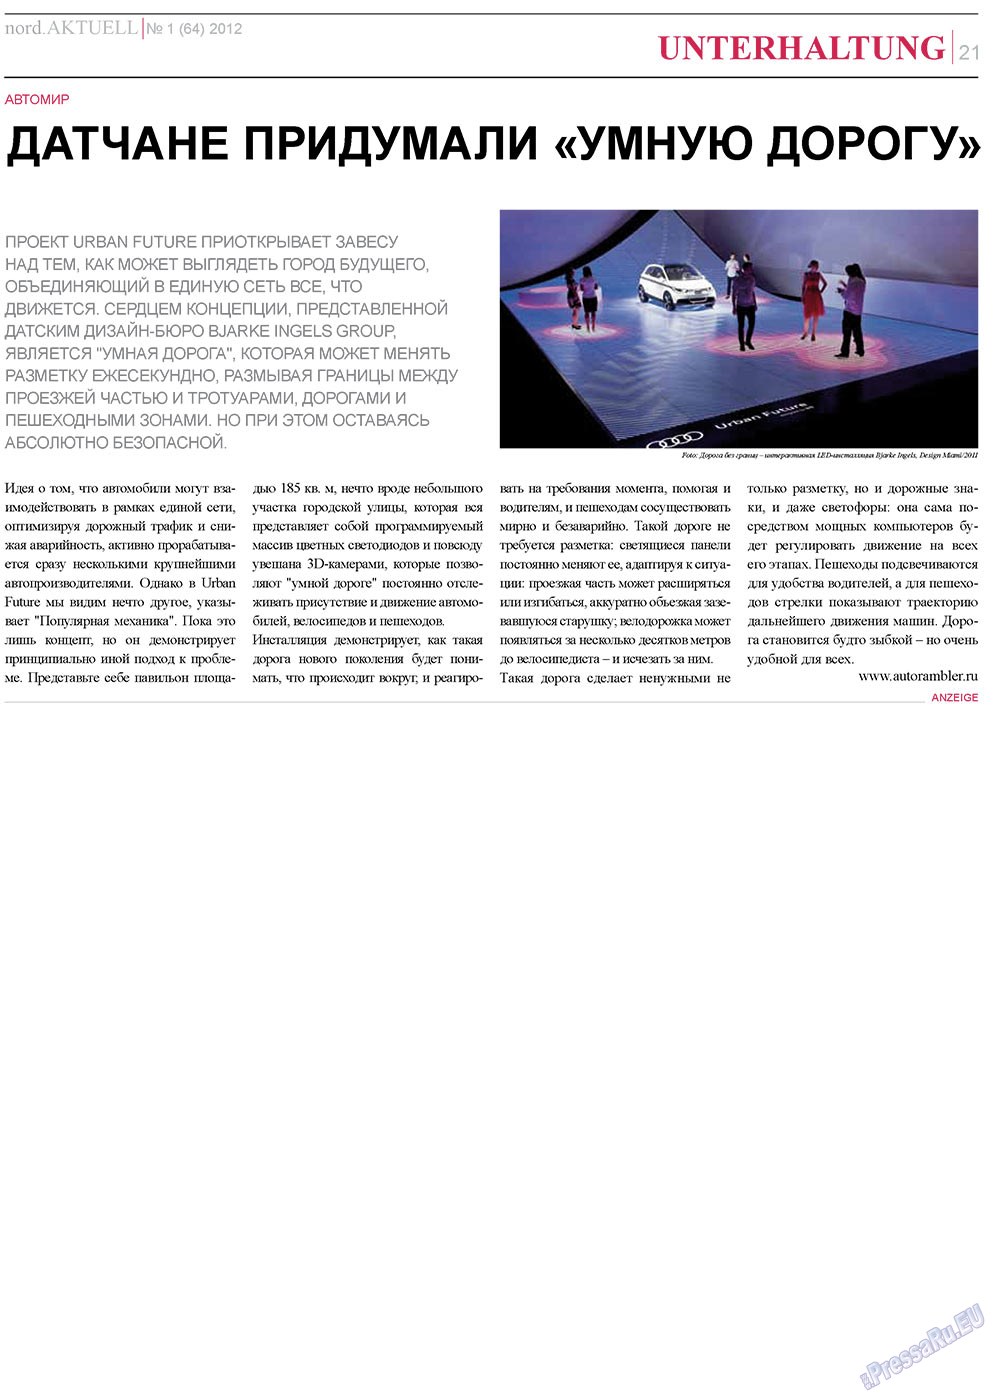 nord.Aktuell (газета). 2012 год, номер 1, стр. 21